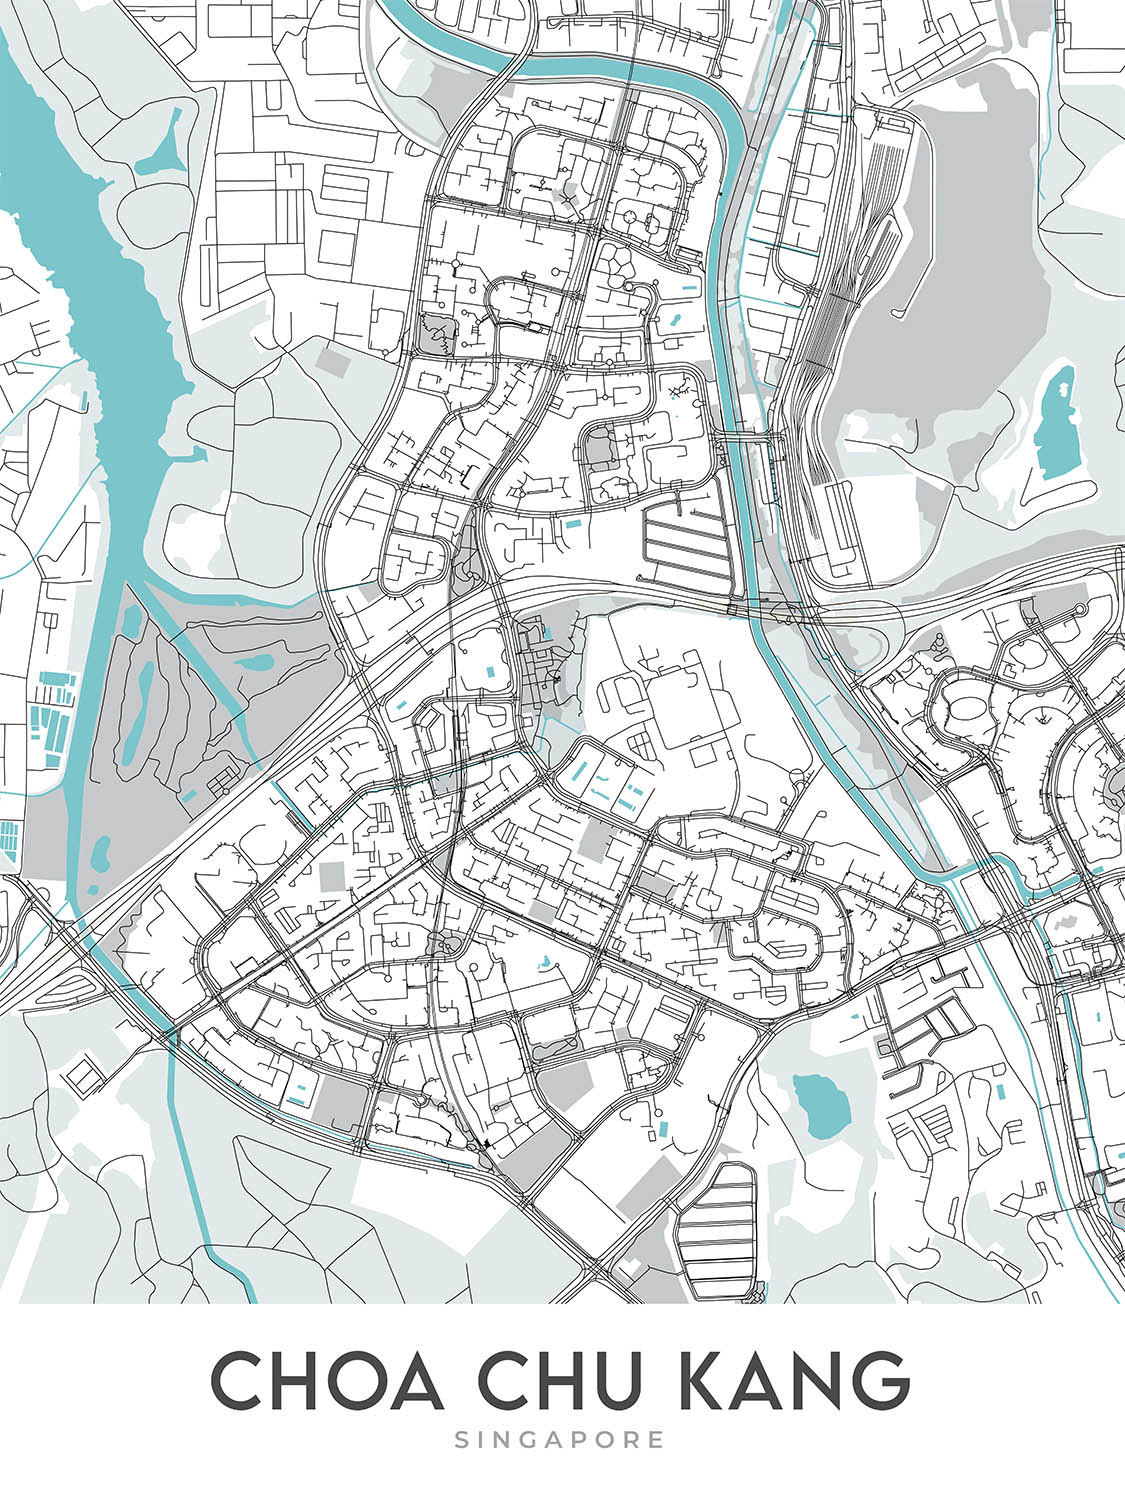 Modern City Map of Choa Chu Kang, Singapore: MRT Station, Lot One Mall, CCK Park, Warren Golf Club, Teck Whye Centre